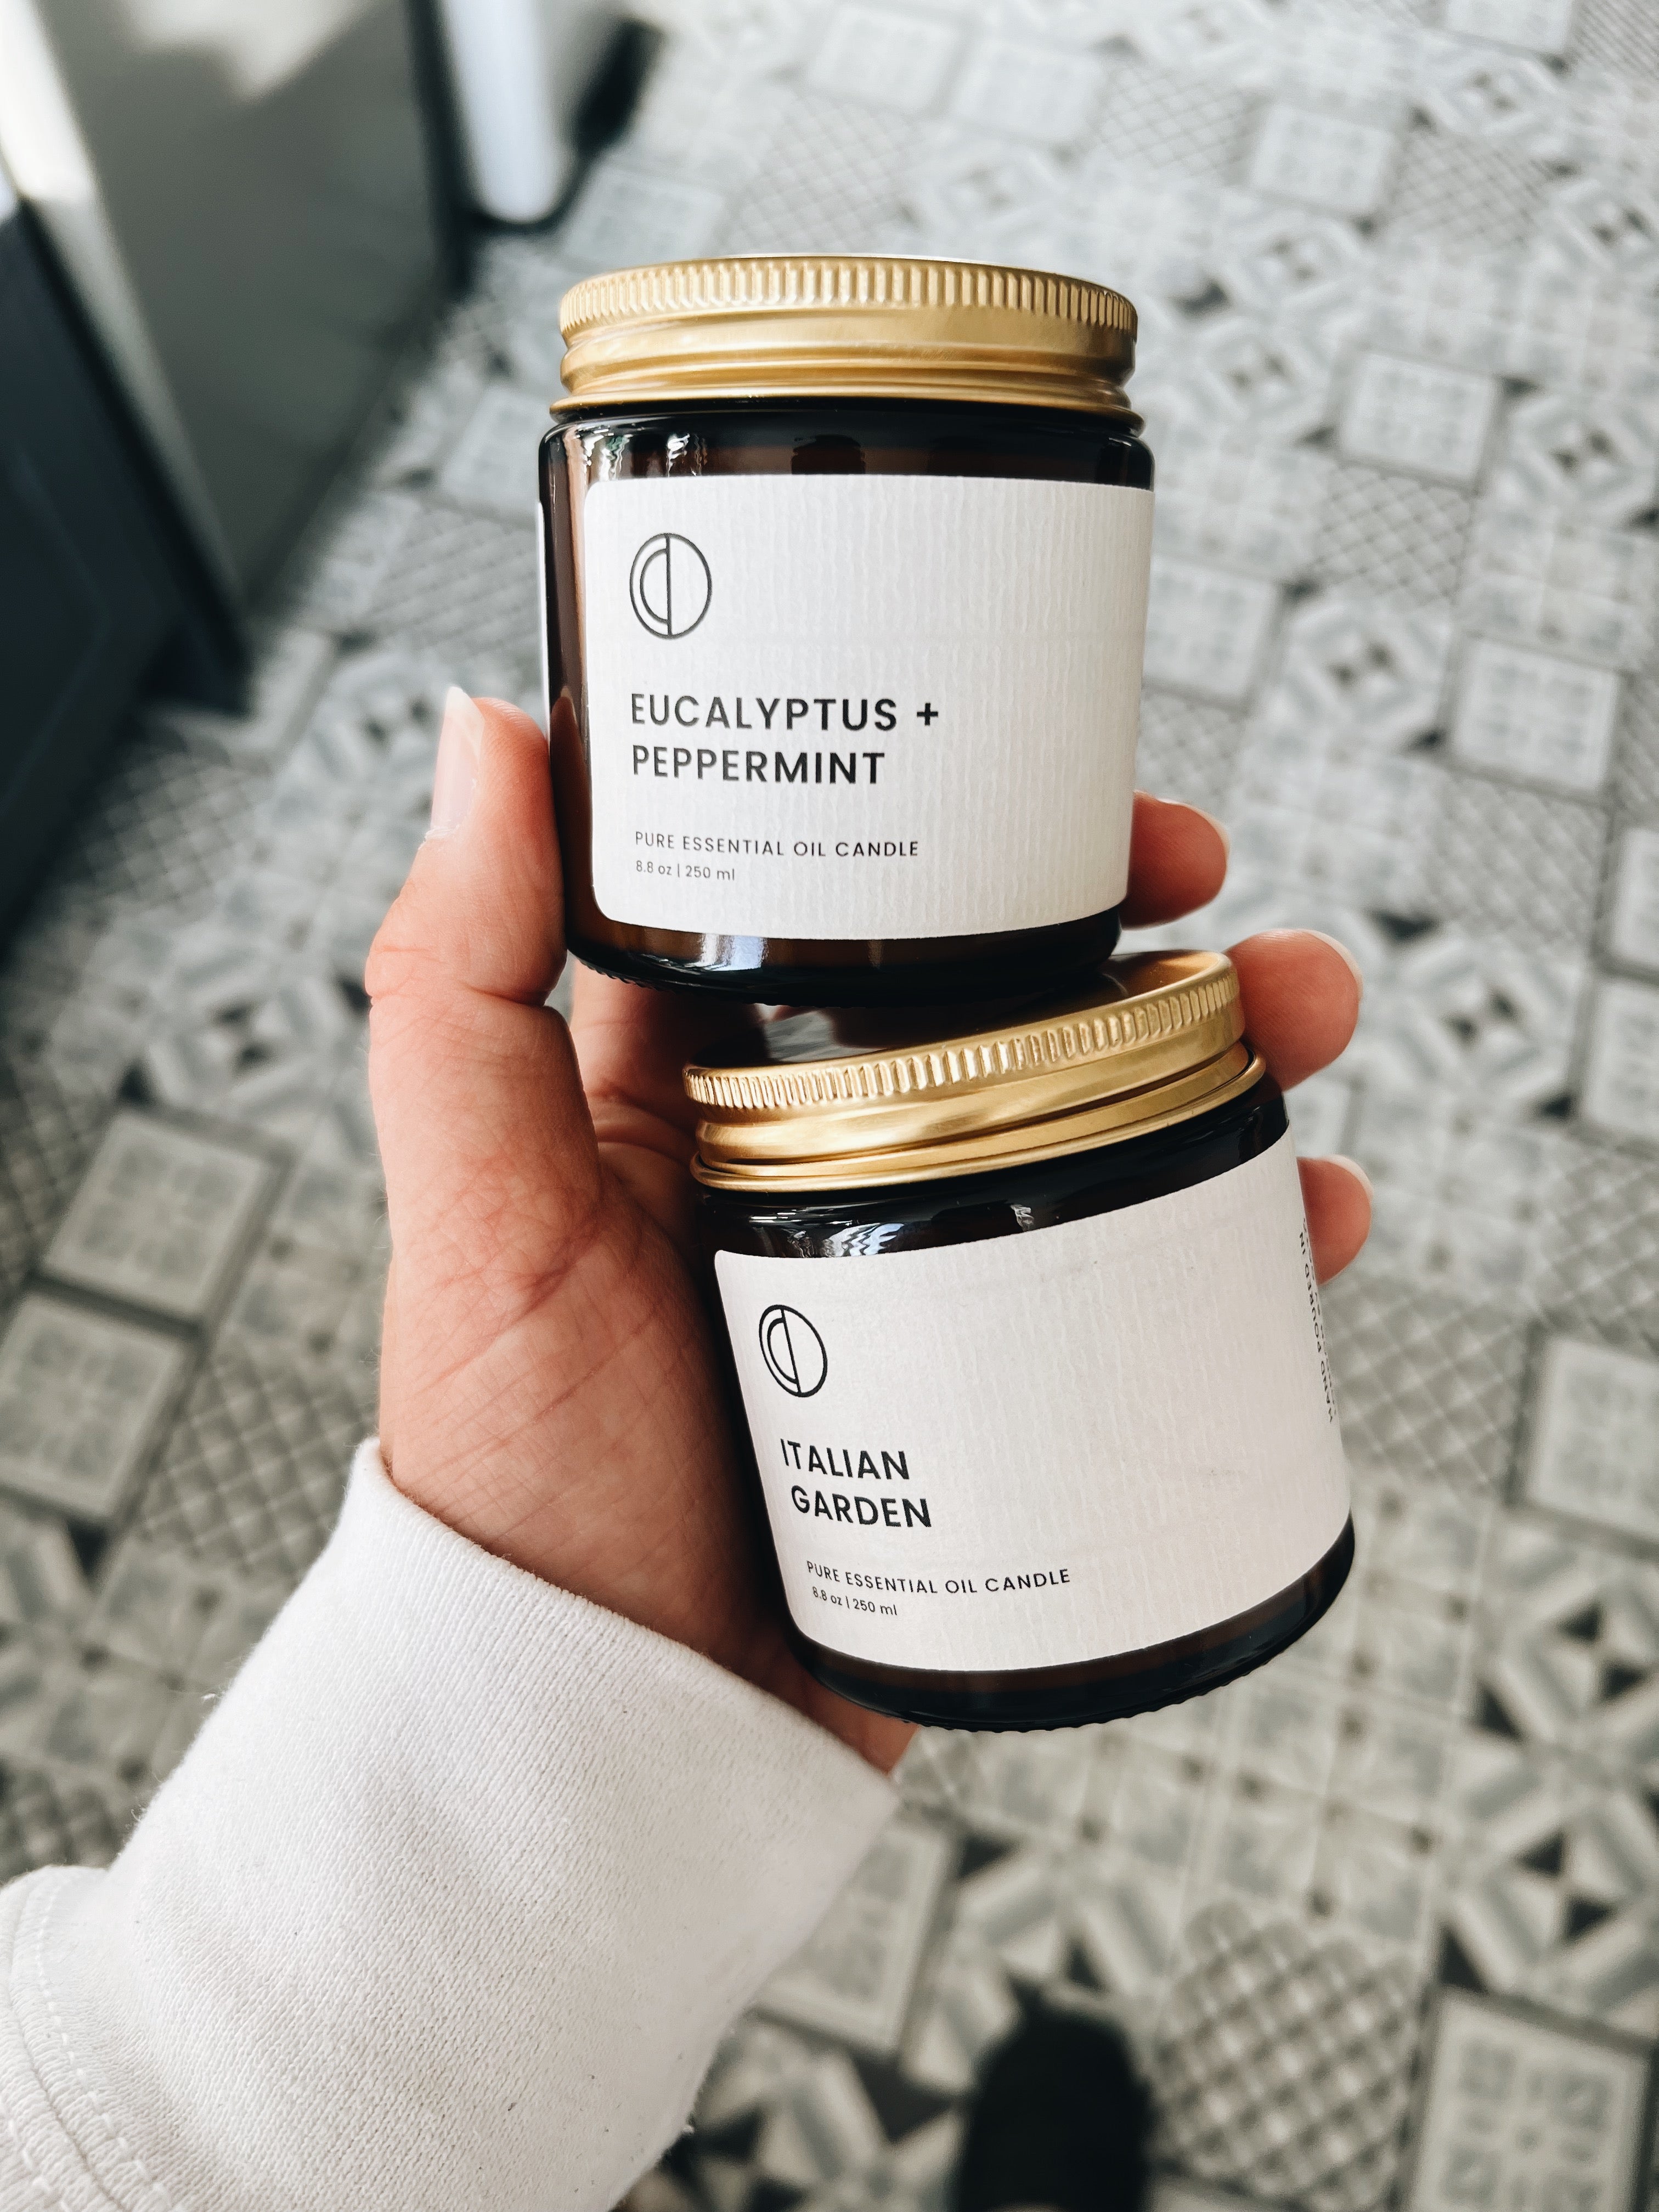 Eucalyptus + Peppermint candle